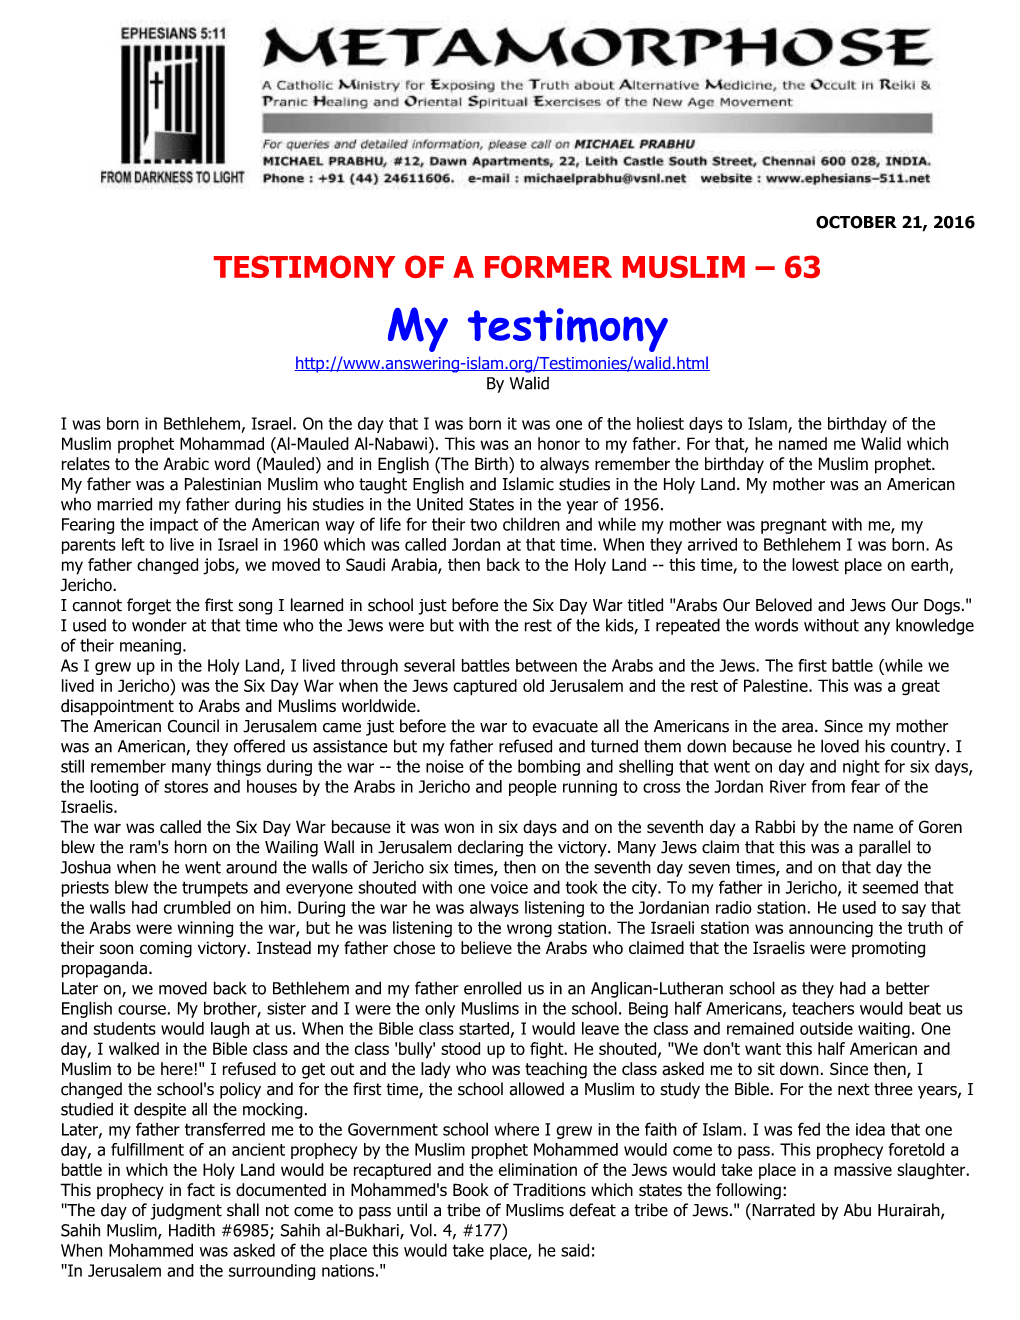 Testimony of a Former Muslim 63